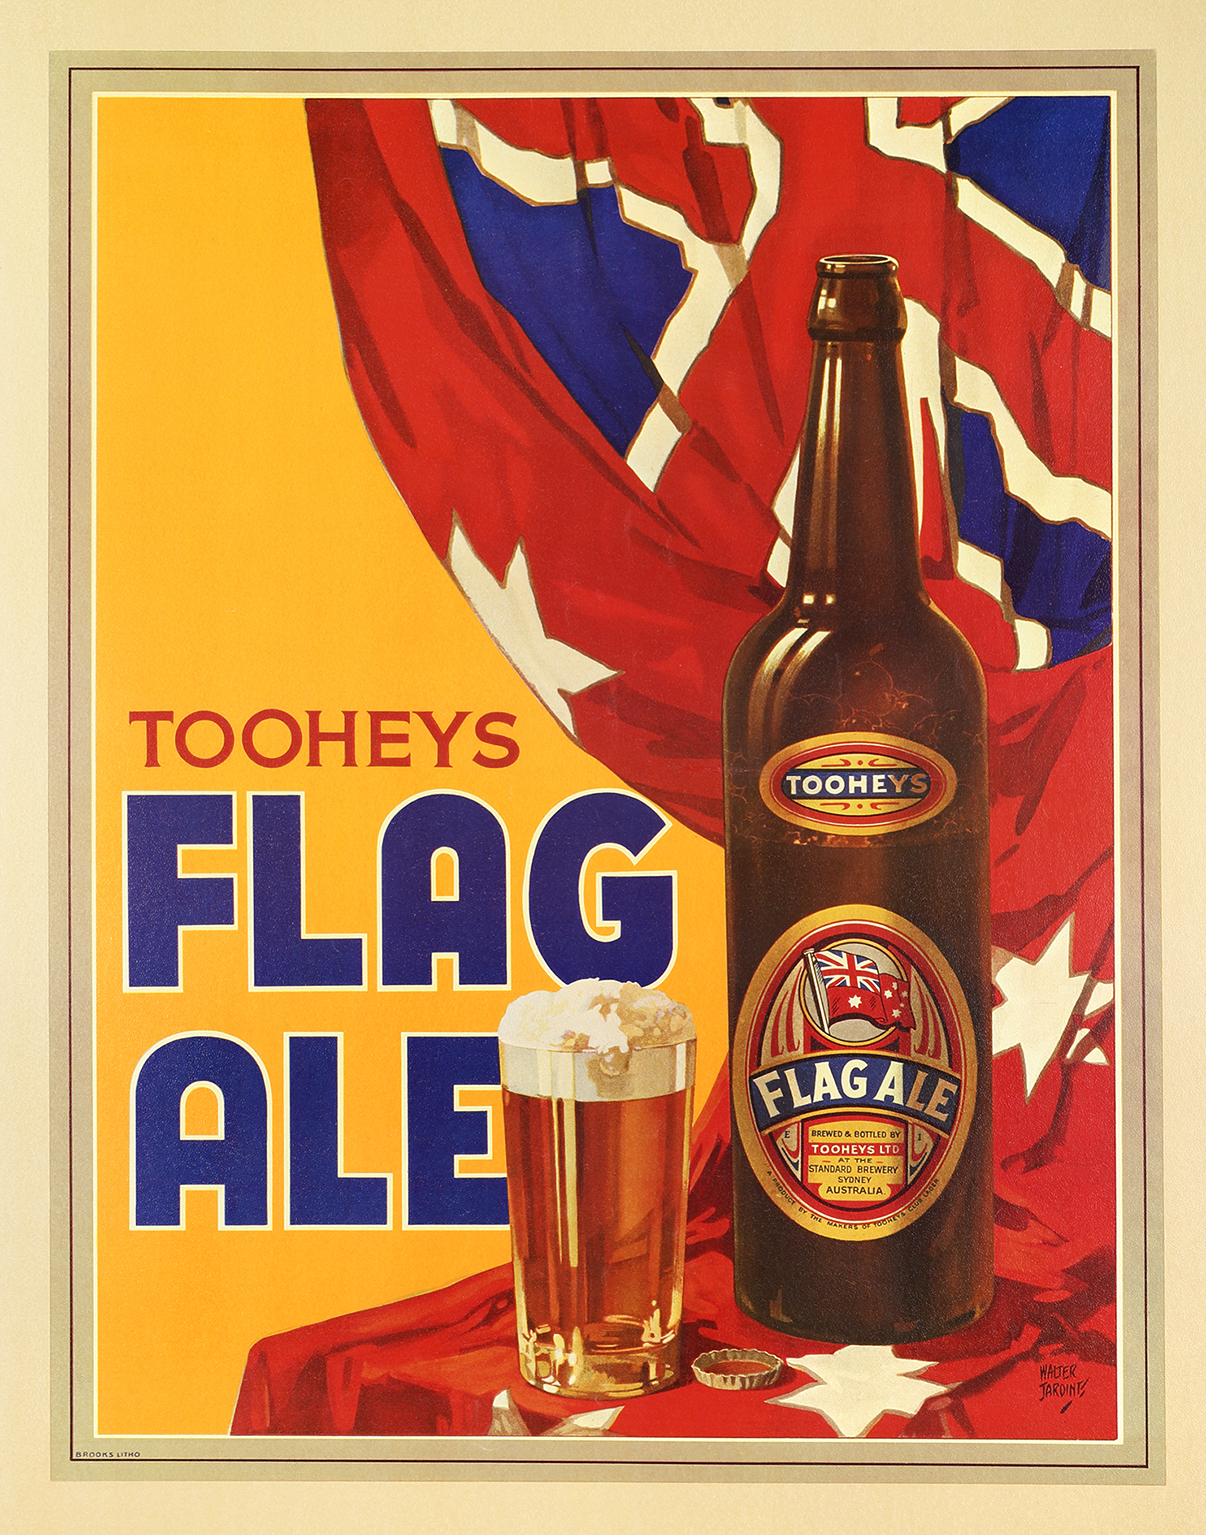 Tooheys Flag Ale - Vintage Print from 1935